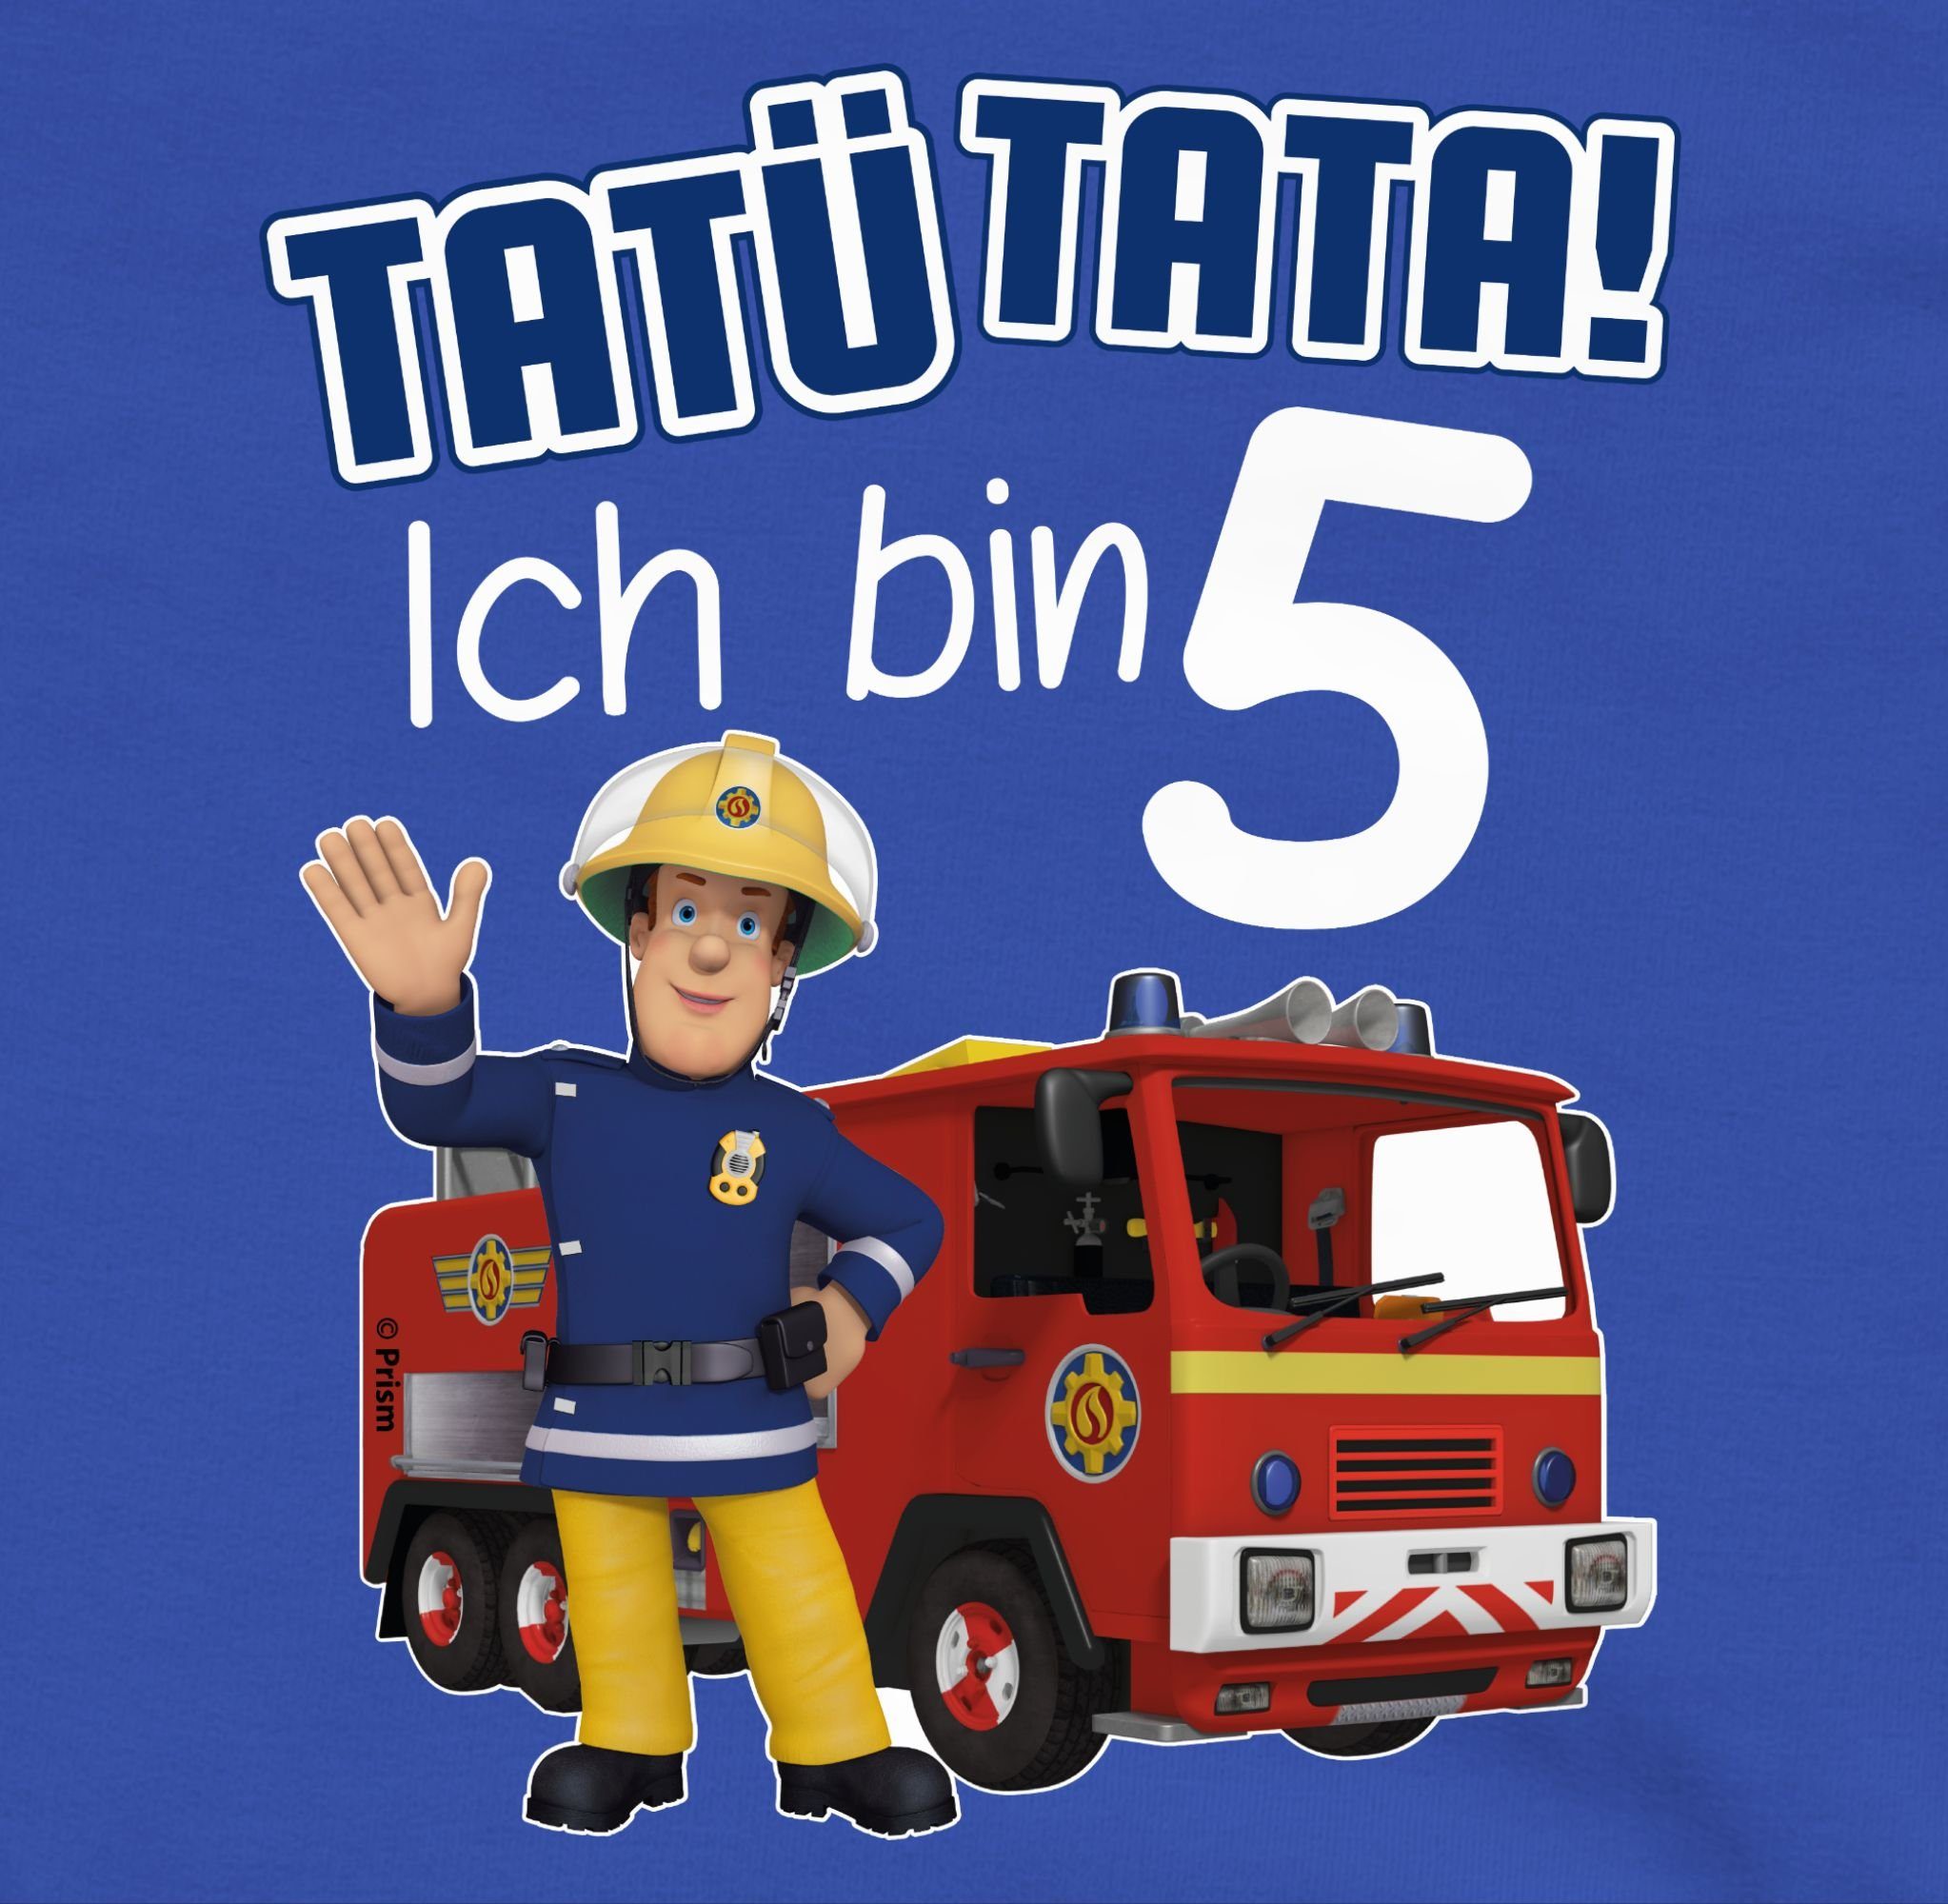 Shirtracer Sweatshirt Tatü Tata! 5 Ich Royalblau - Mädchen Sam bin 1 blau Feuerwehrmann